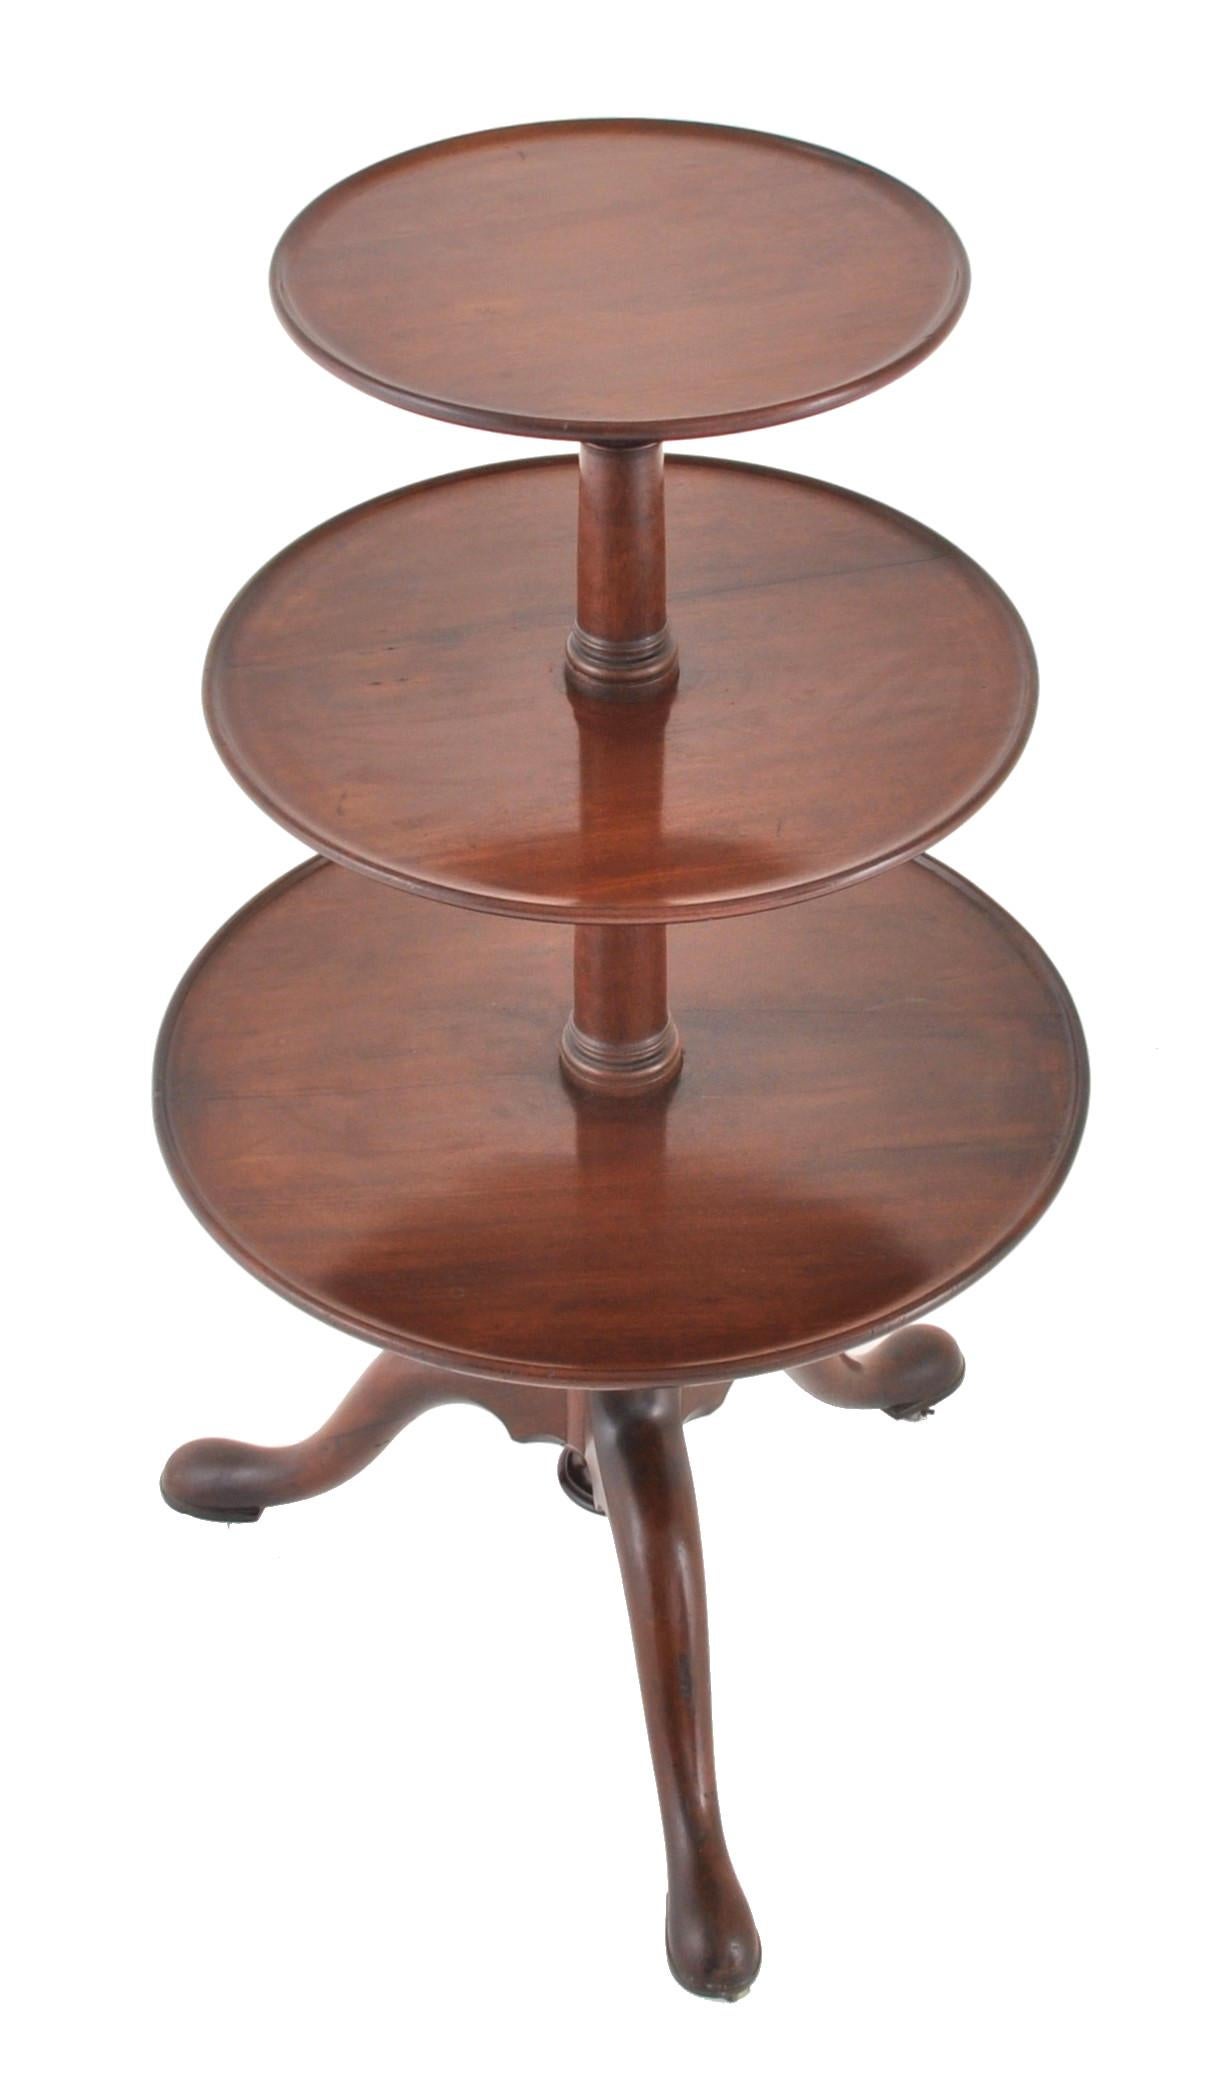 3 tier antique table